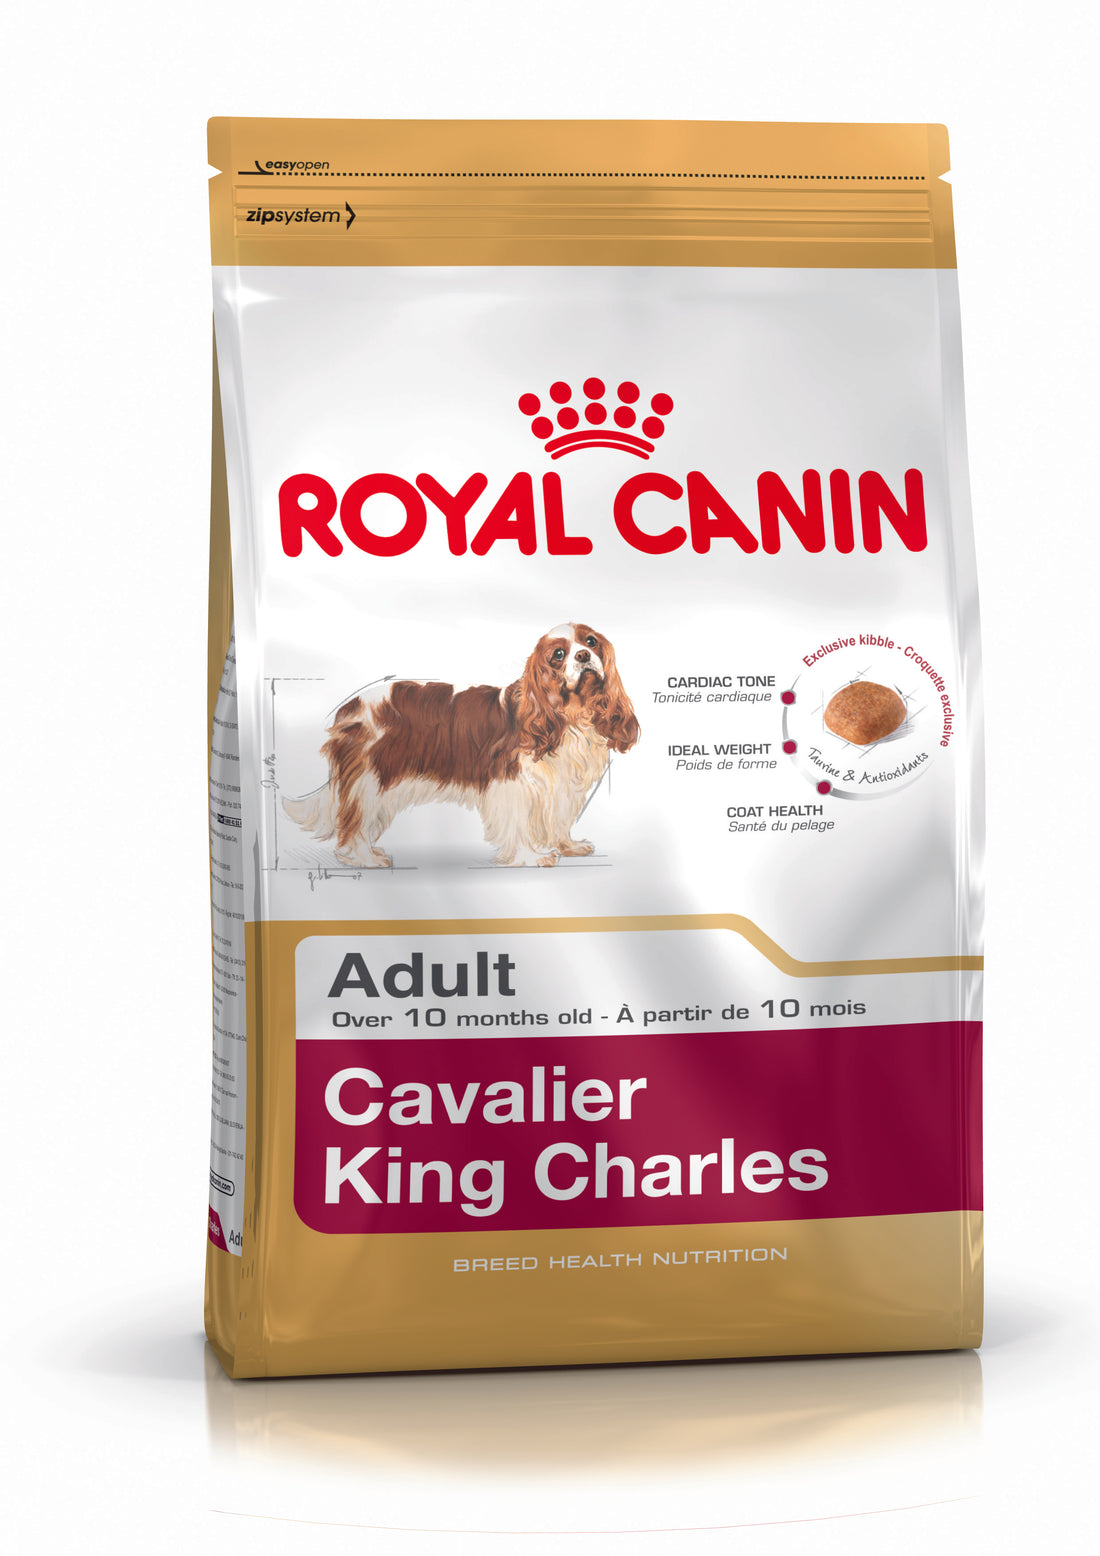 Royal Canin-Cavalier King Charles Dog Food 7.5Kg